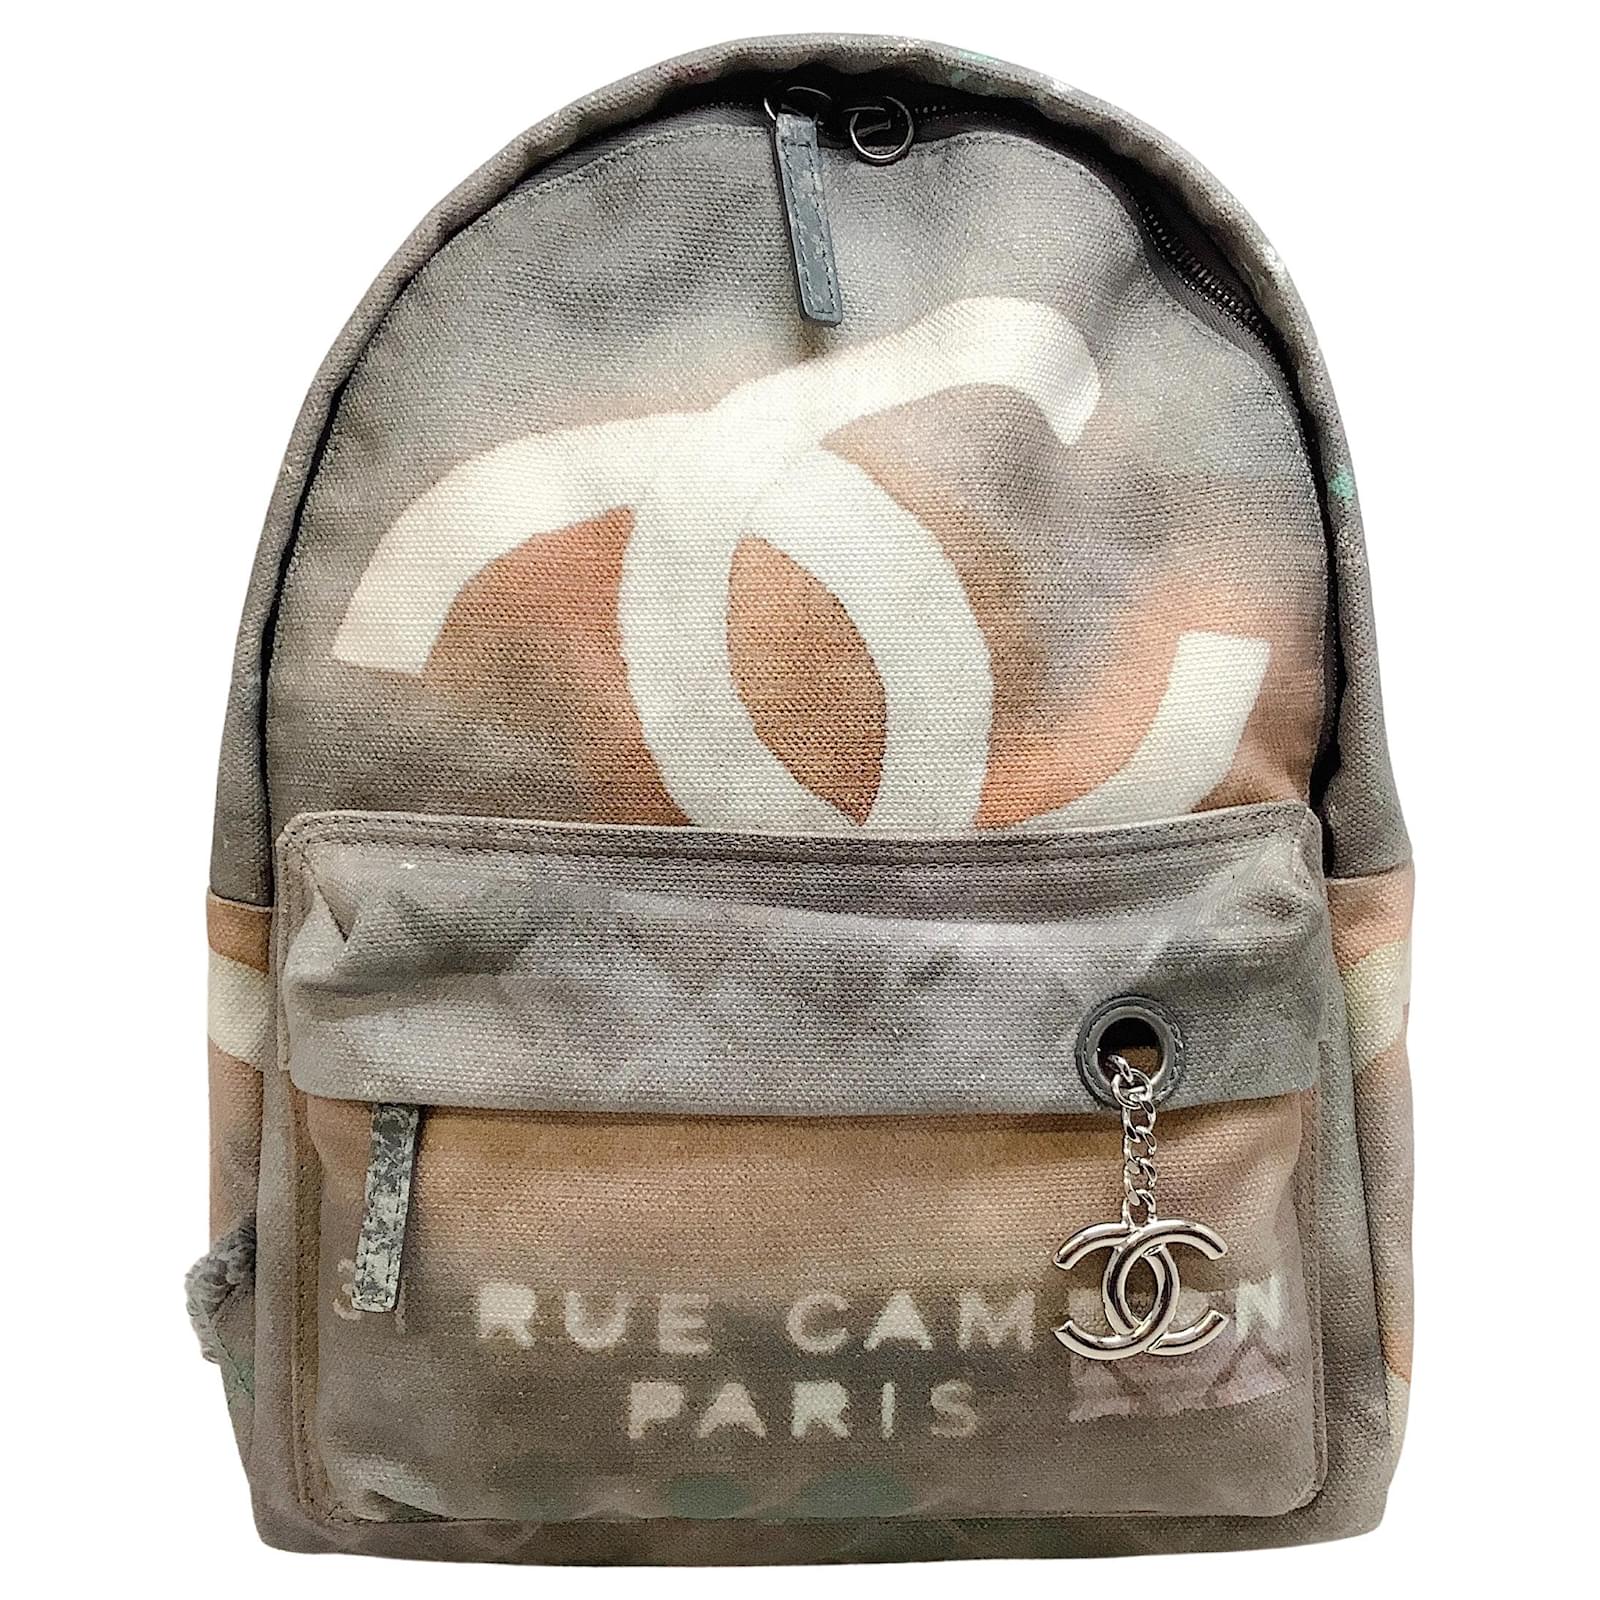 Handbags Chanel Chanel 2014 Art School Grey Multi Canvas Backpack